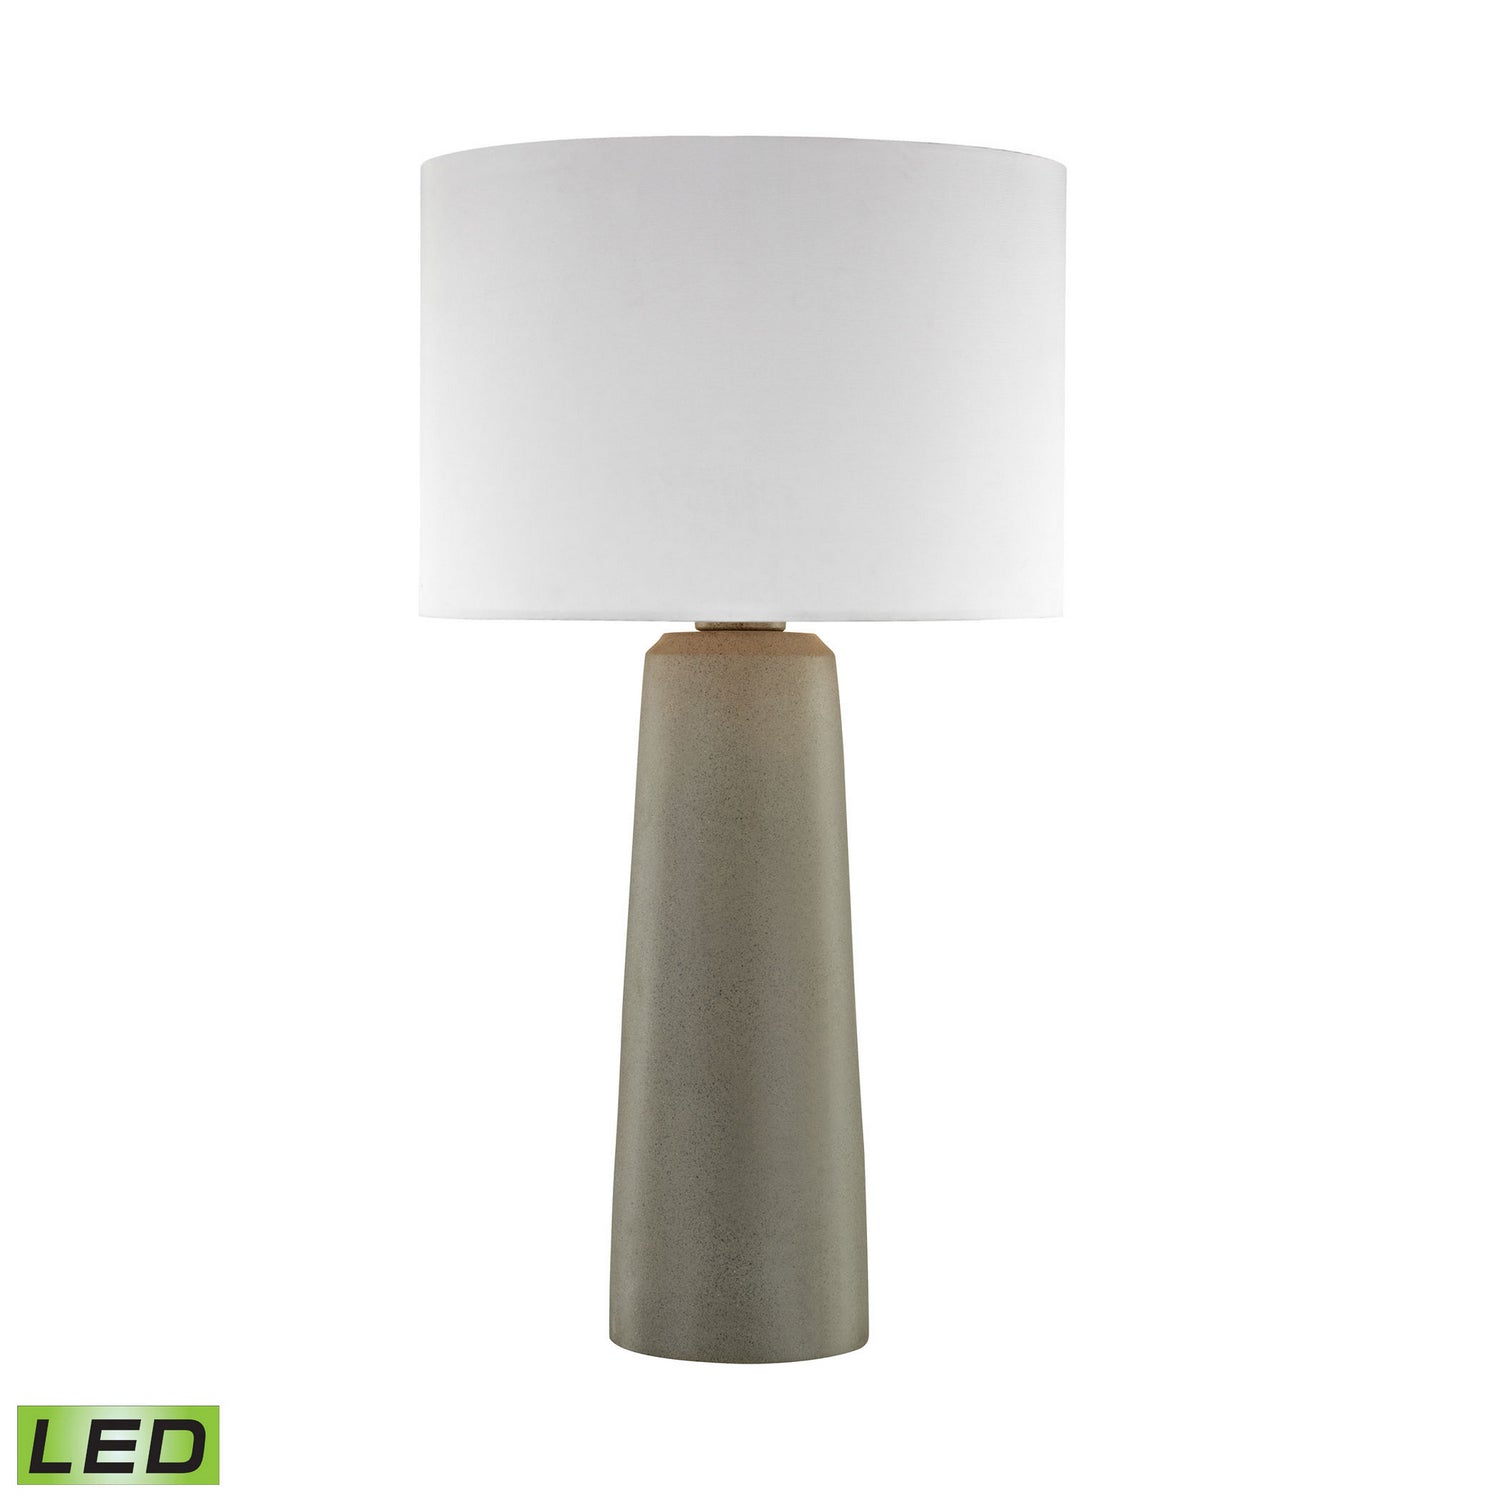 ELK Home - D3097-LED - LED Table Lamp - Eilat - Polished Concrete